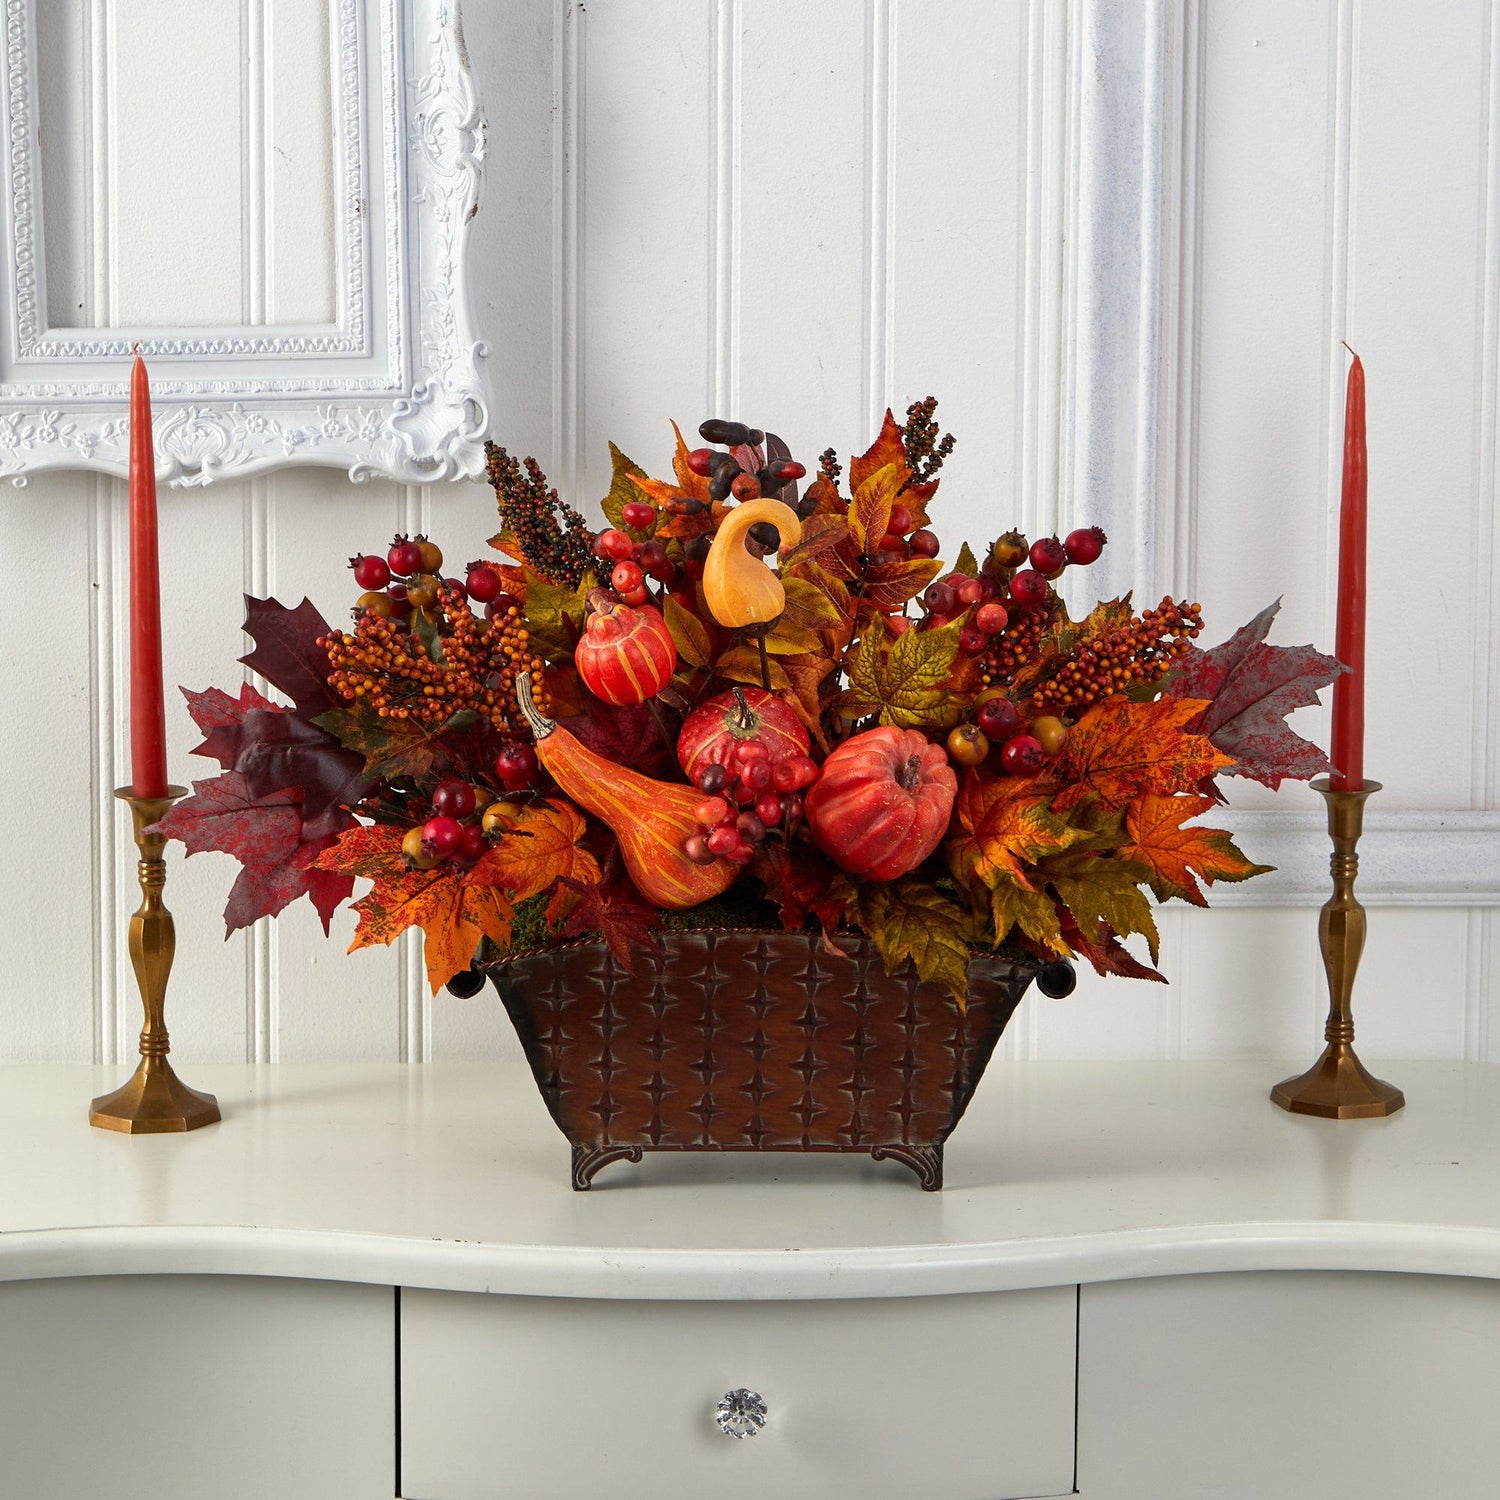 27” Pumpkin, Maple Leaf and Berries Artificial Arrangement in Metal Vase